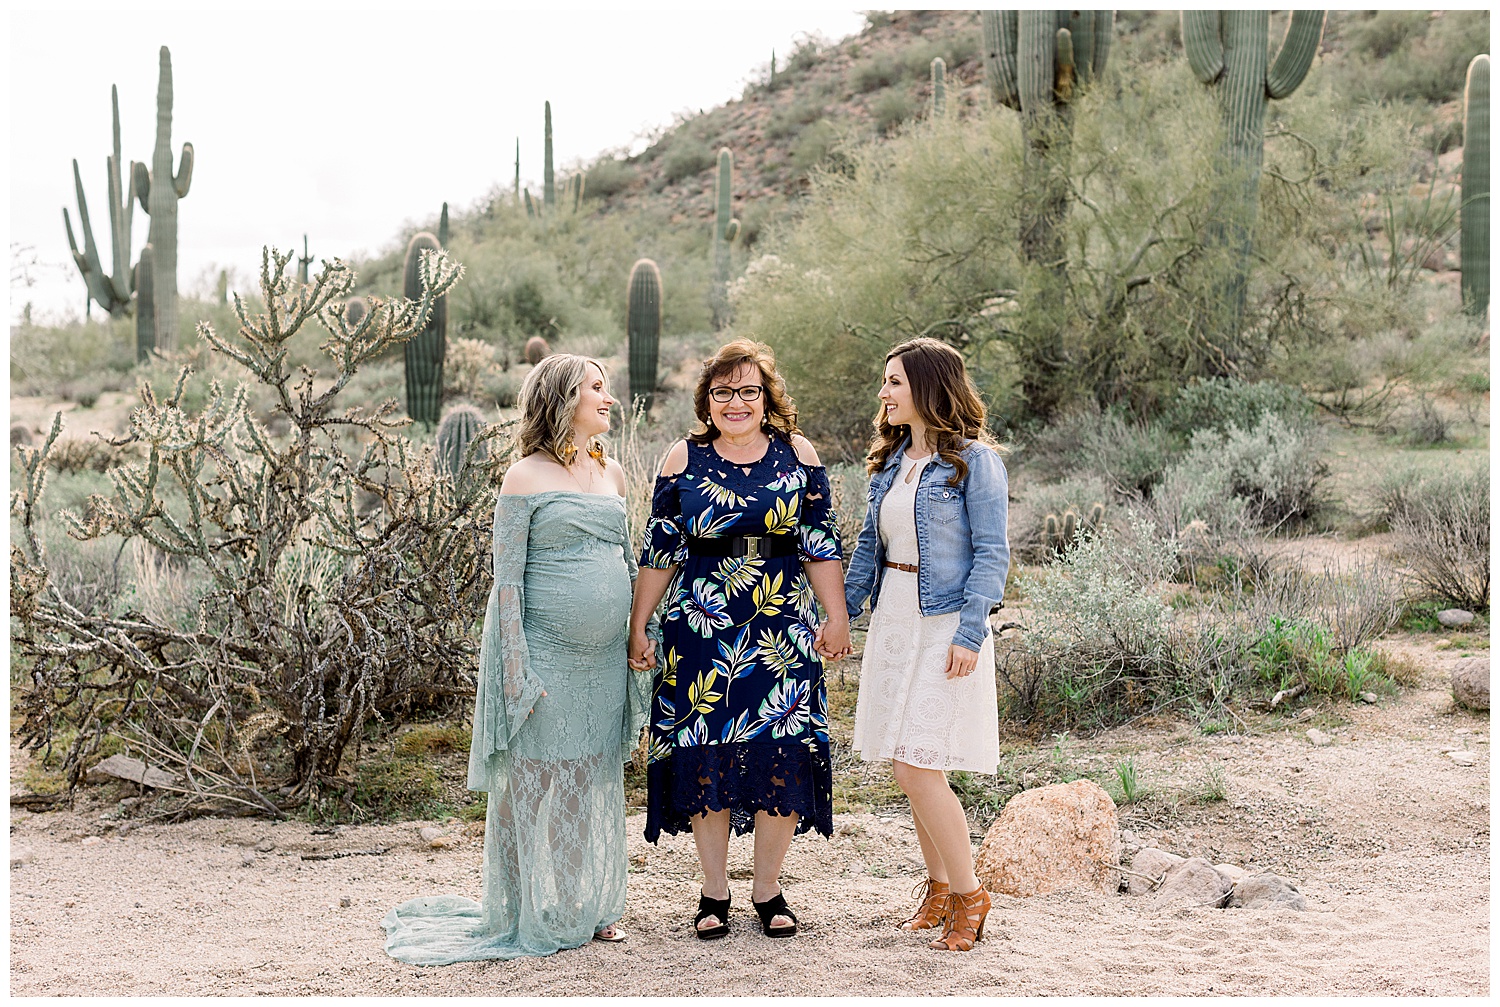 Multigenerational Women at Maternity and family session in Mesa, Arizona